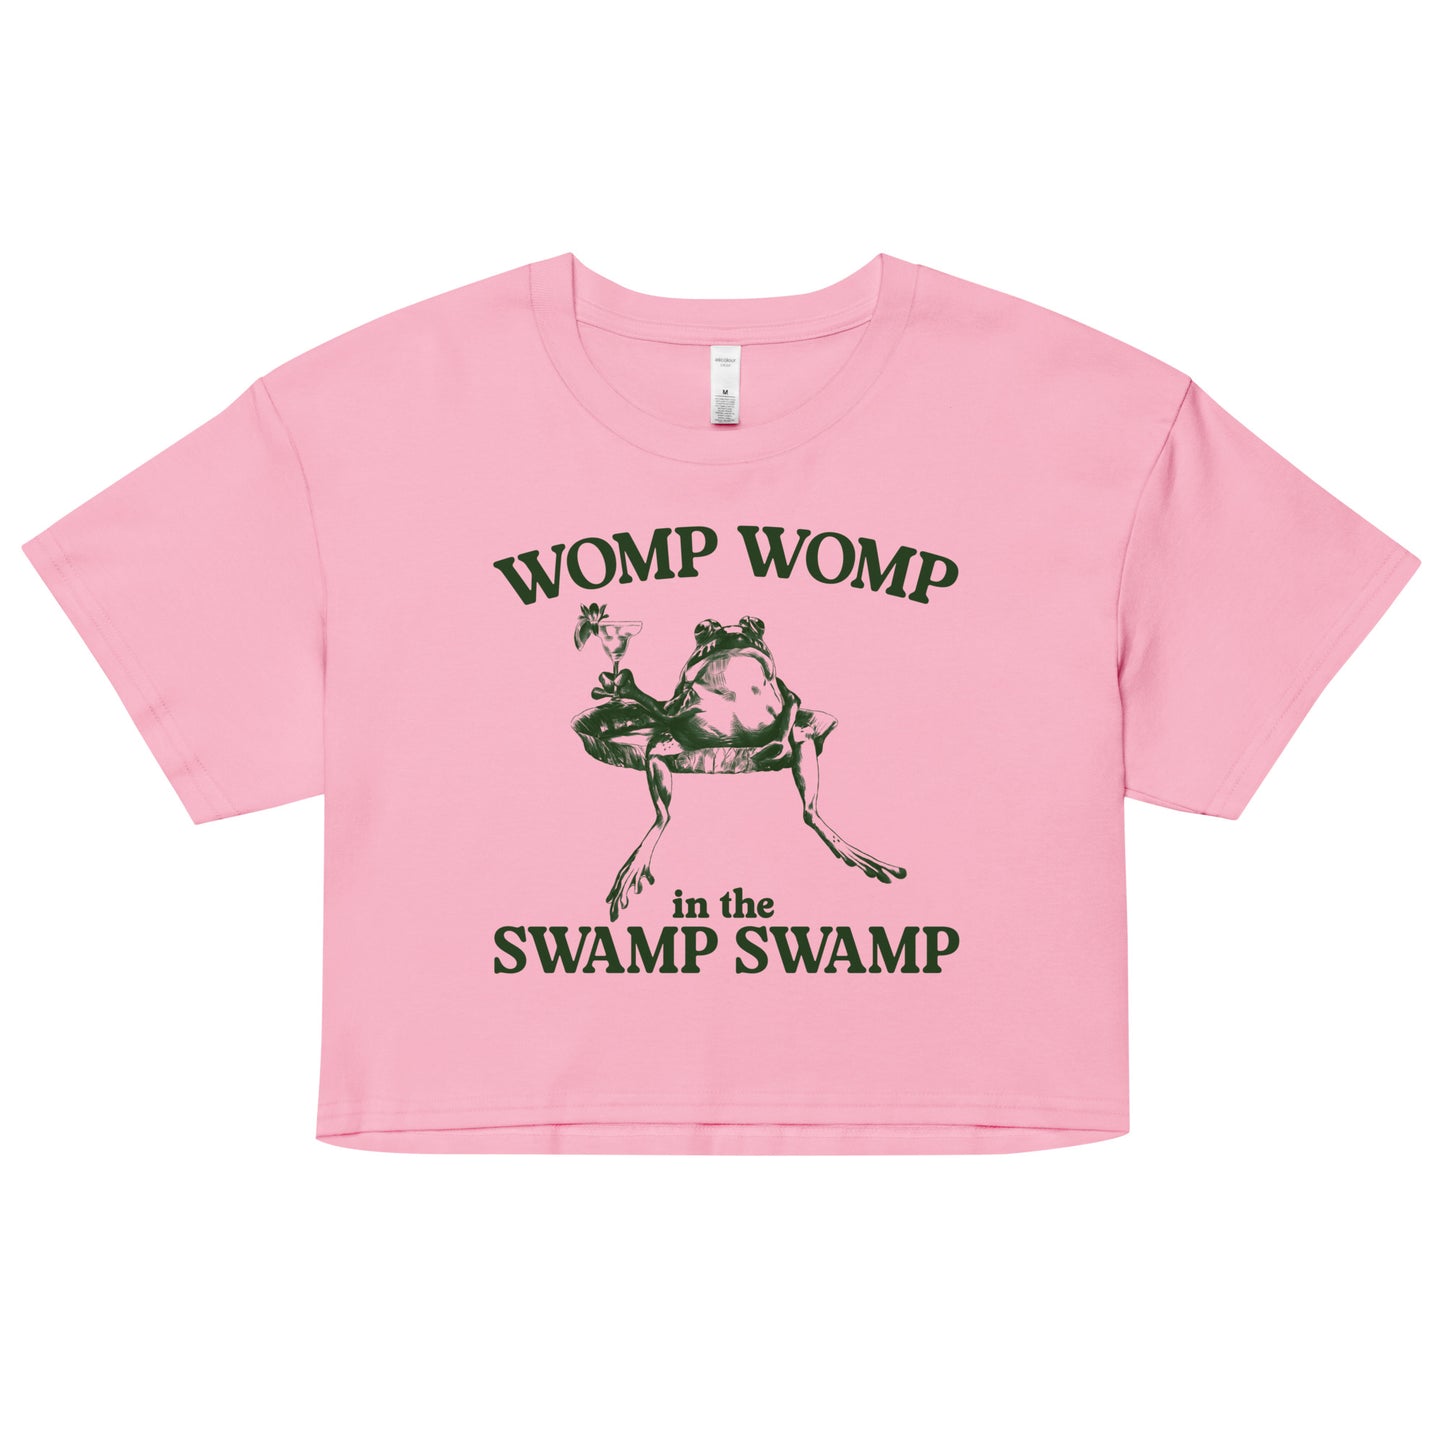 Womp Womp in the Swamp Swamp crop top